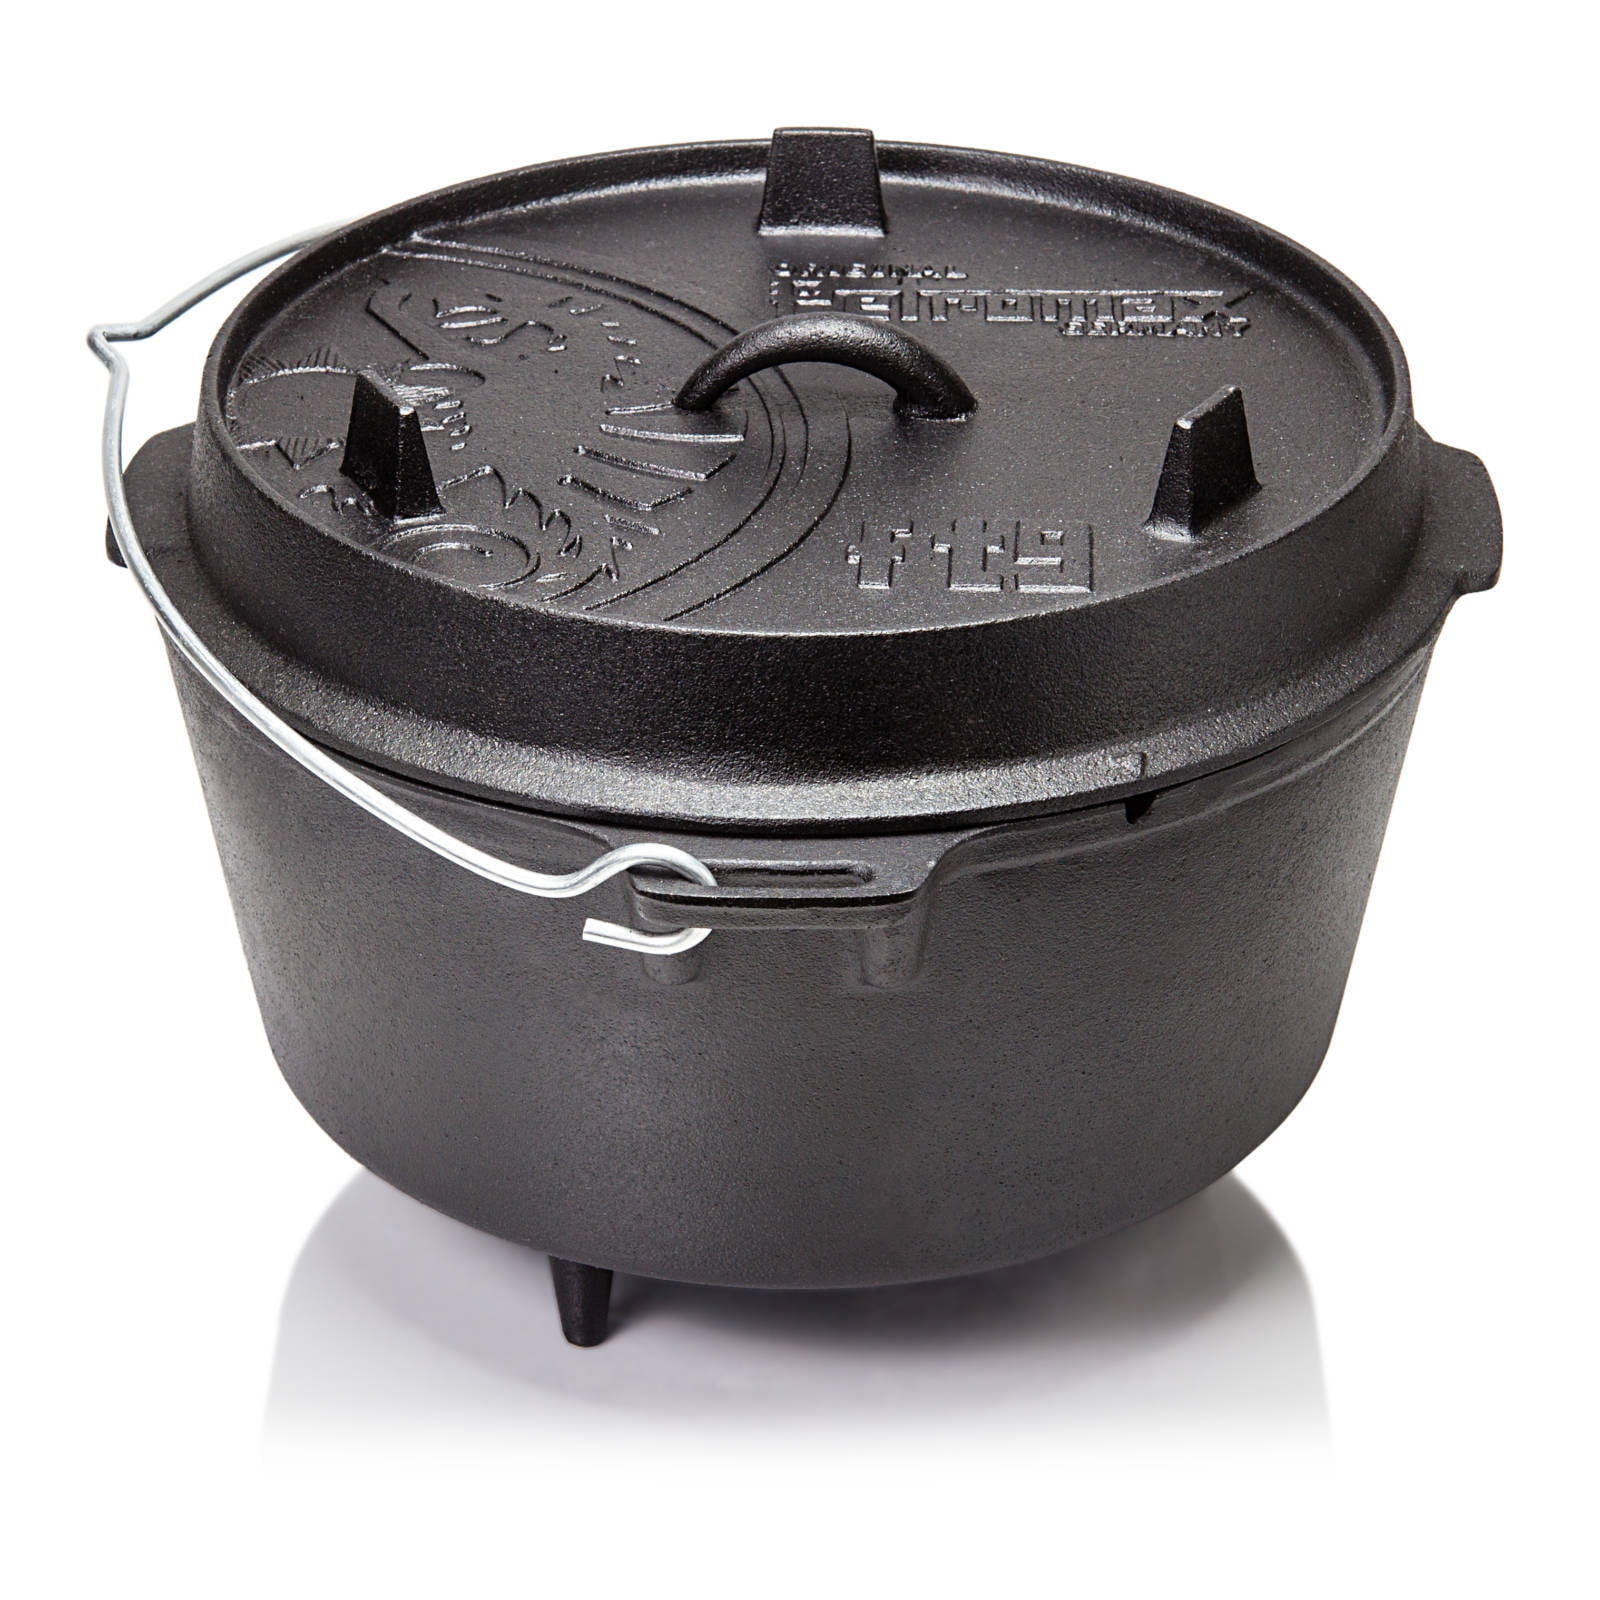 ft3-t Potje Pot Cast Iron Camping Cooking Pot 1-3 People Petromax Dutch Oven 